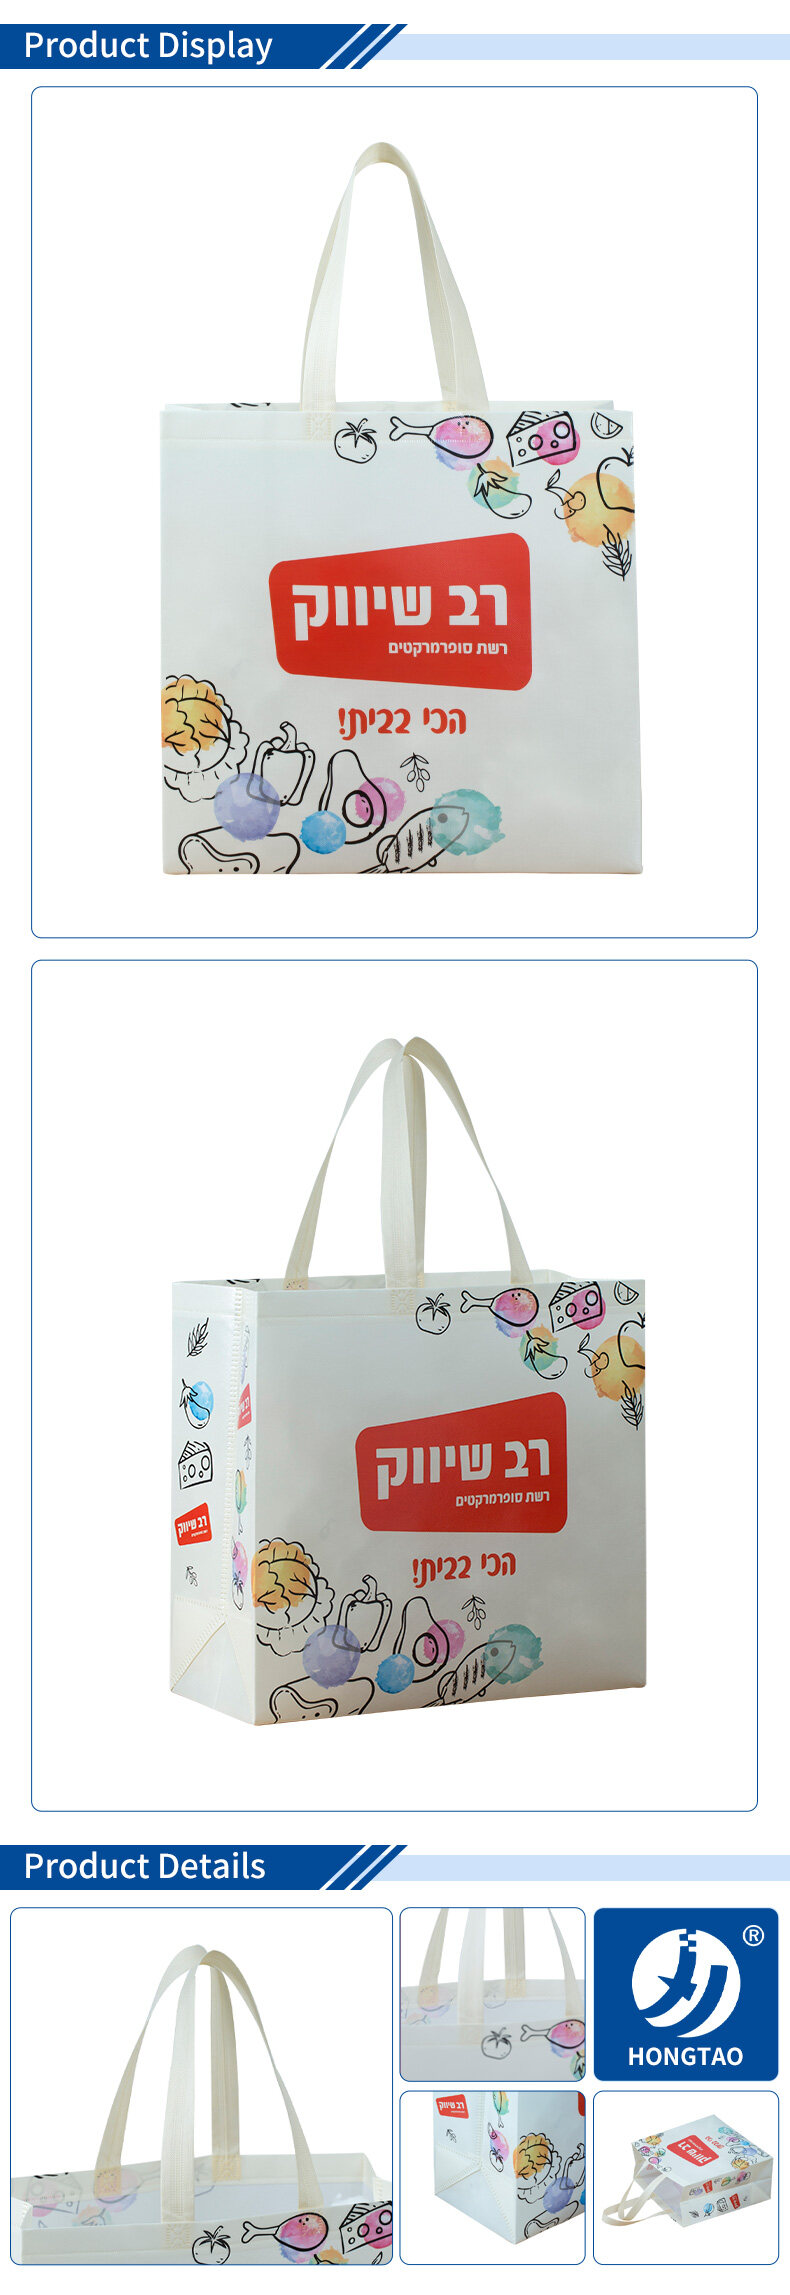 foldable-eco-friendly-shopping-bags_02.jpg